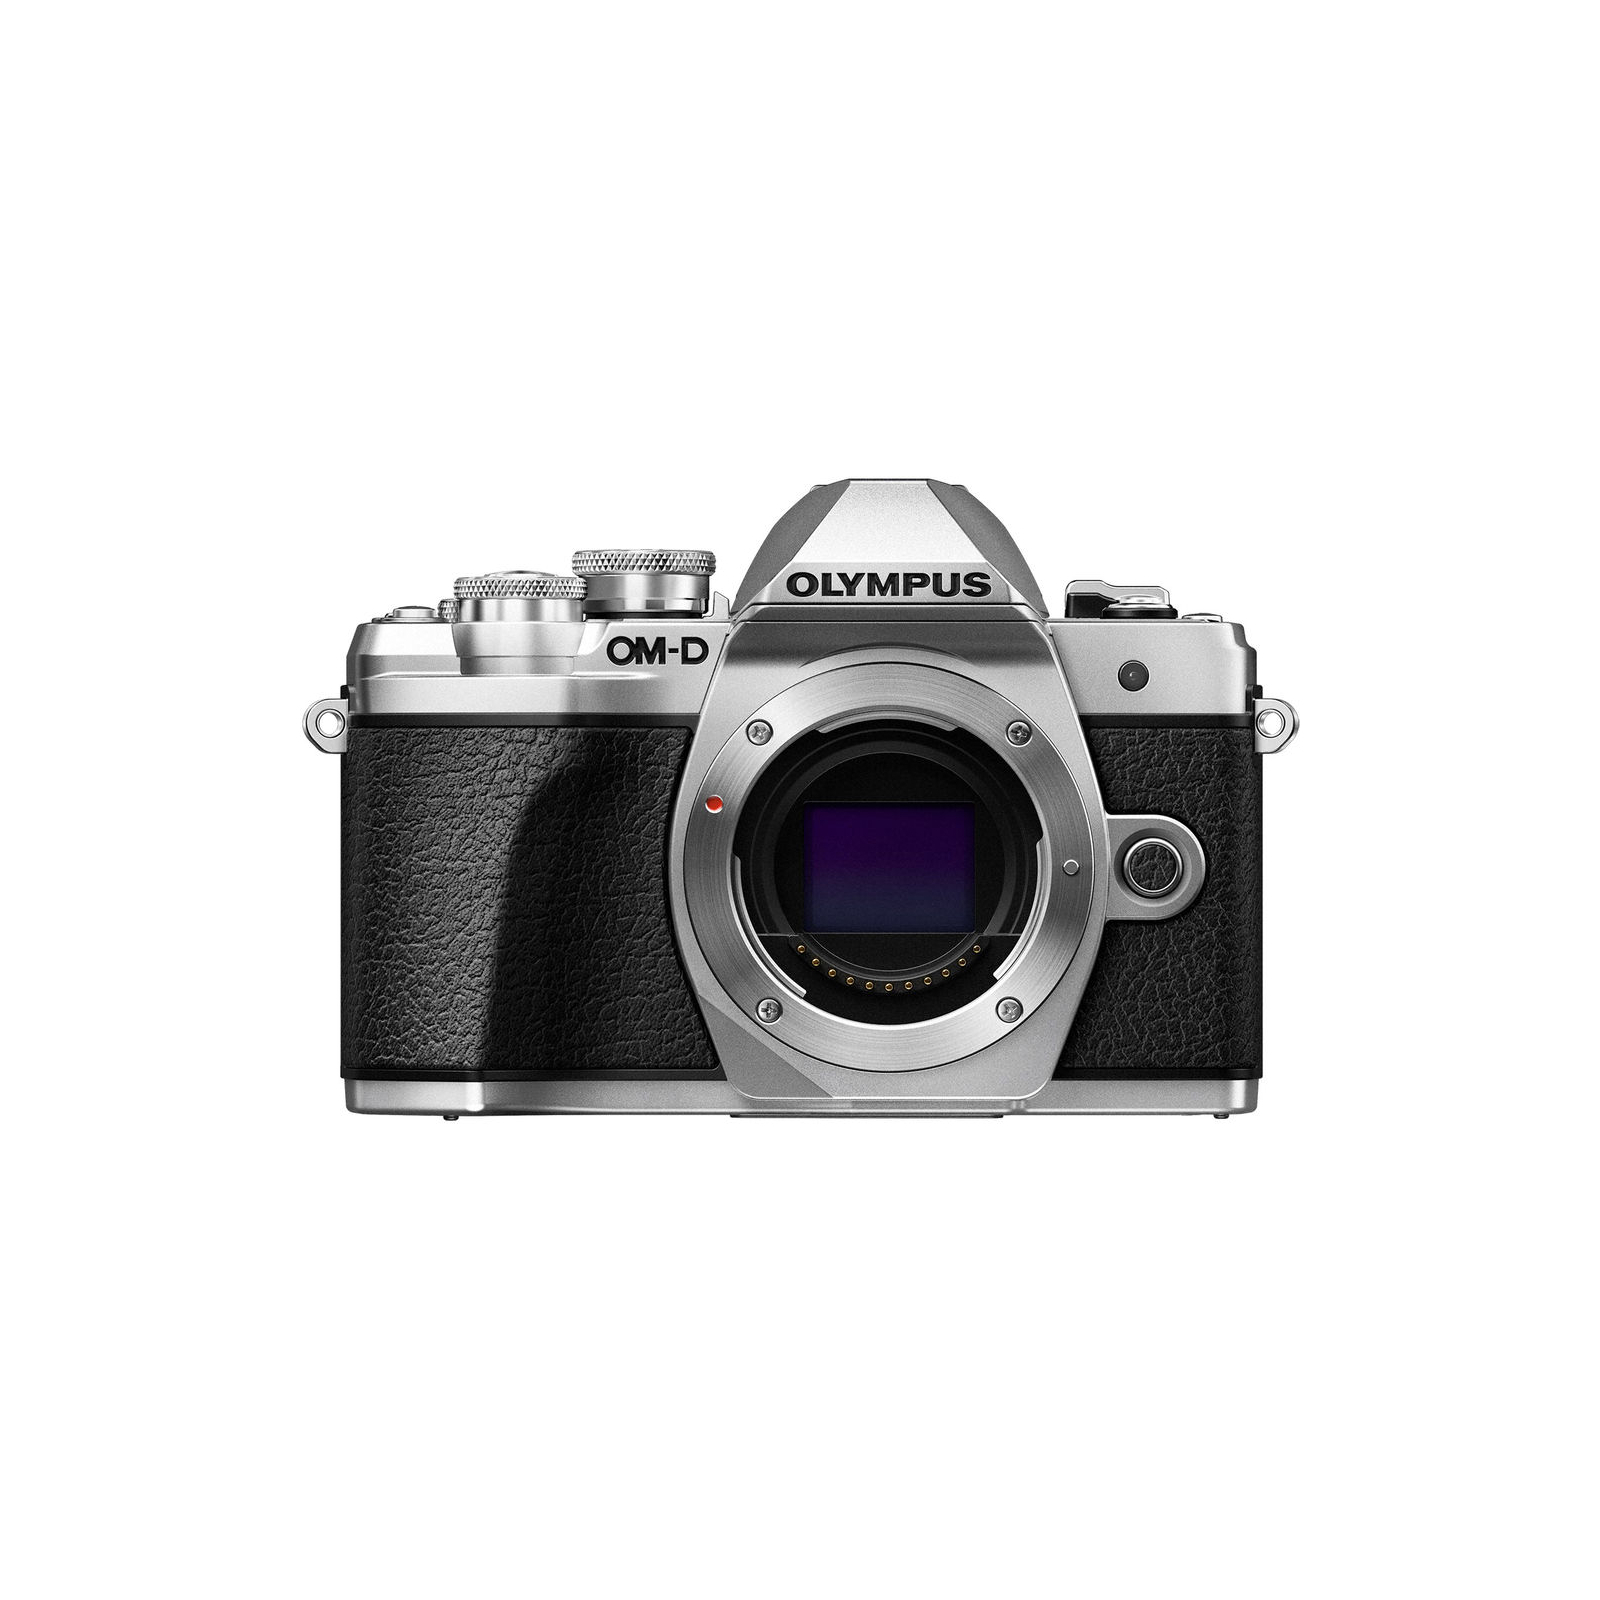 Цифровой фотоаппарат Olympus E-M10 mark III Body silver (V207070SE000) изображение 2